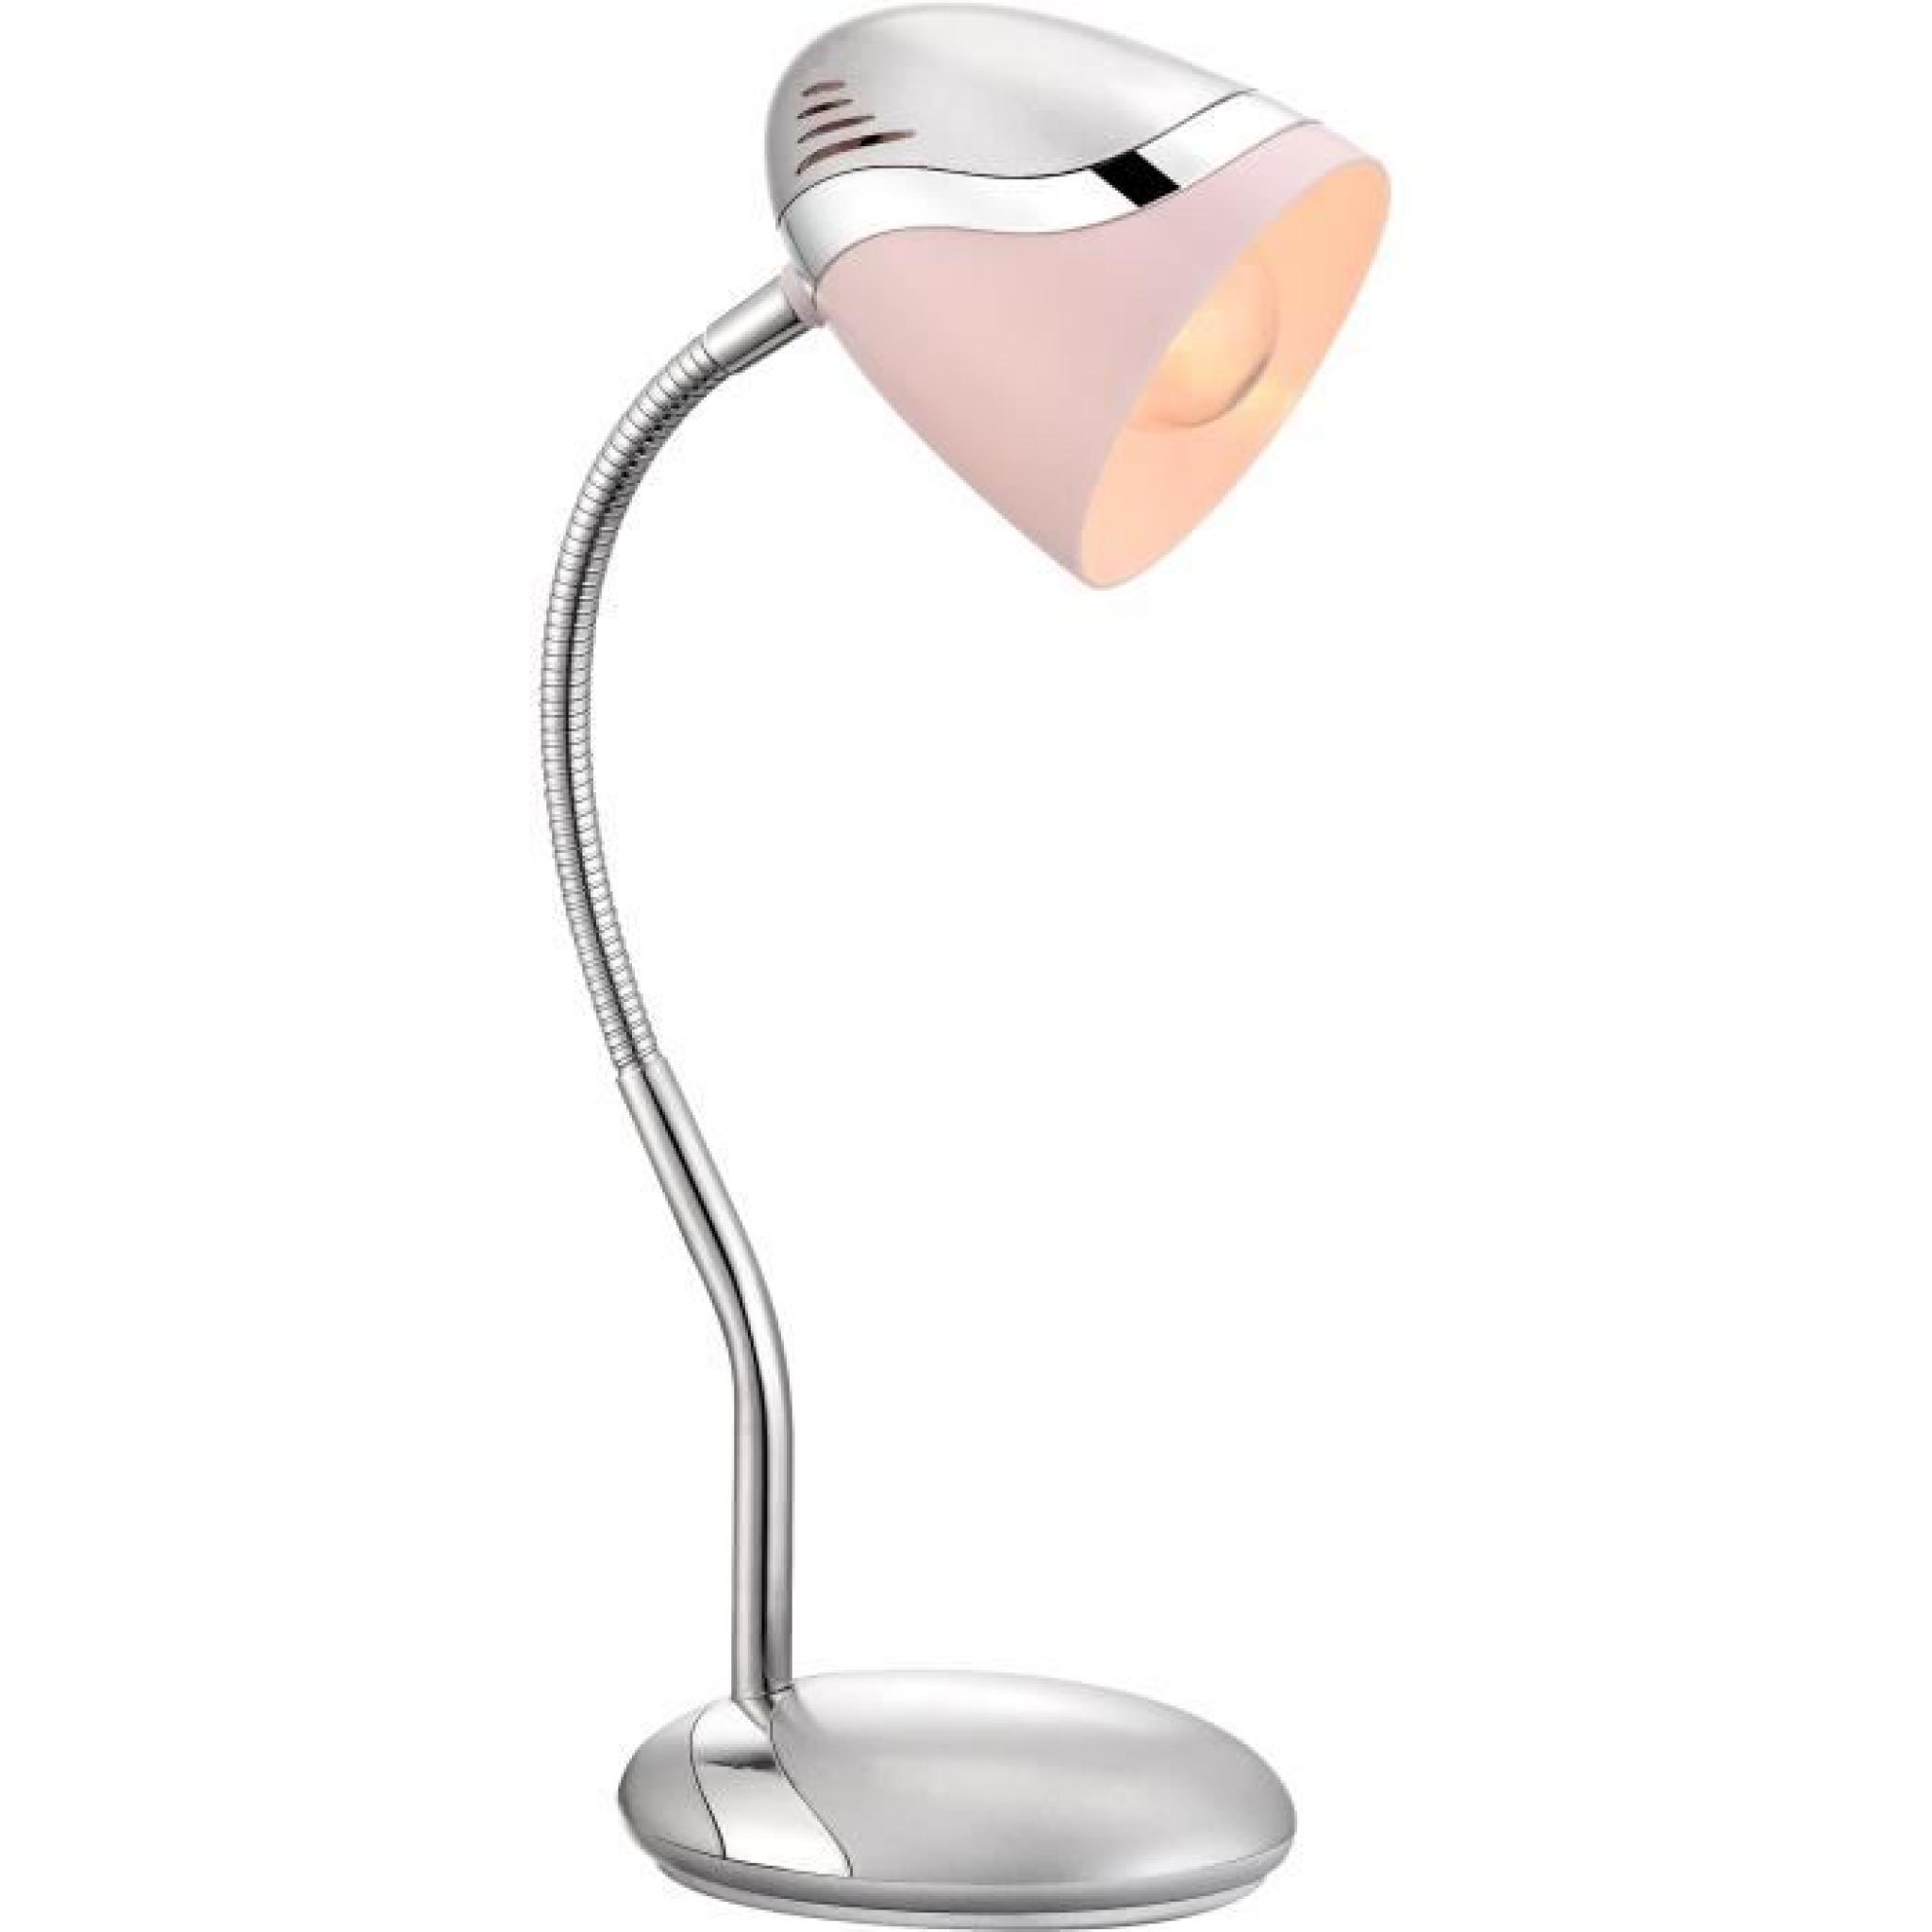 Globo lighting Lampe bureau,PVC blanc/gris,incl…